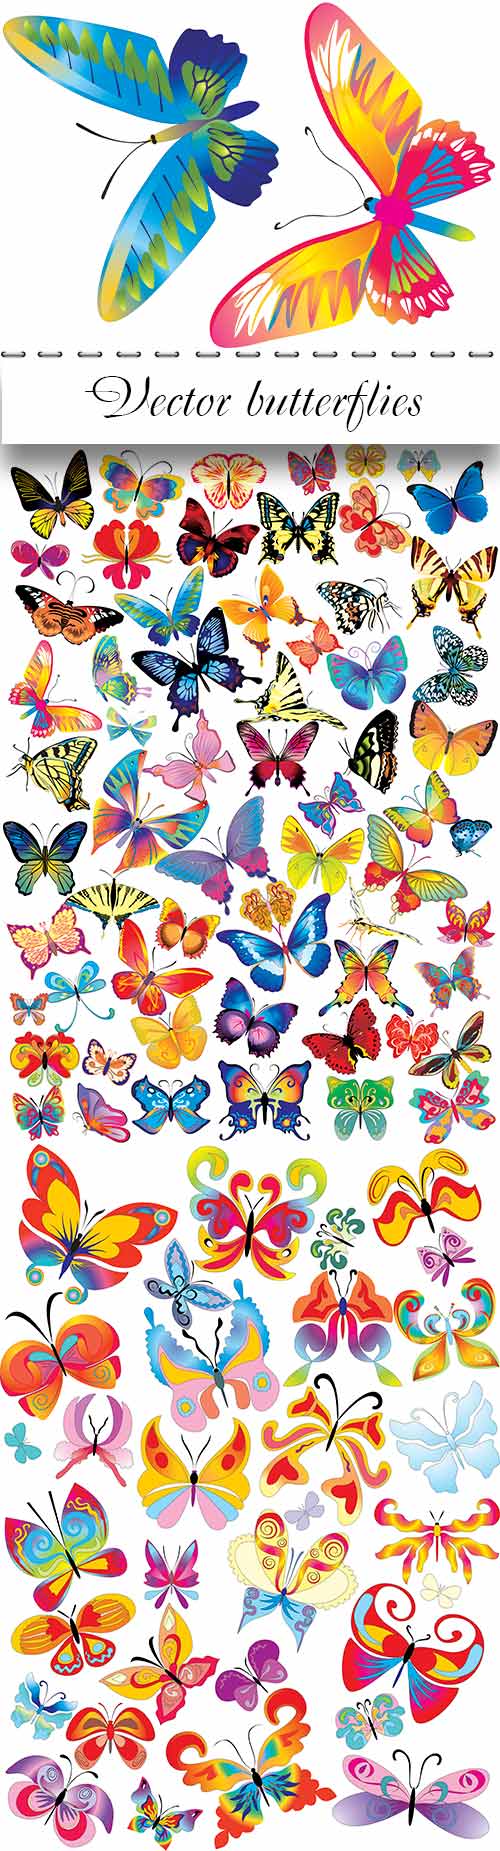 Vector butterflies for design